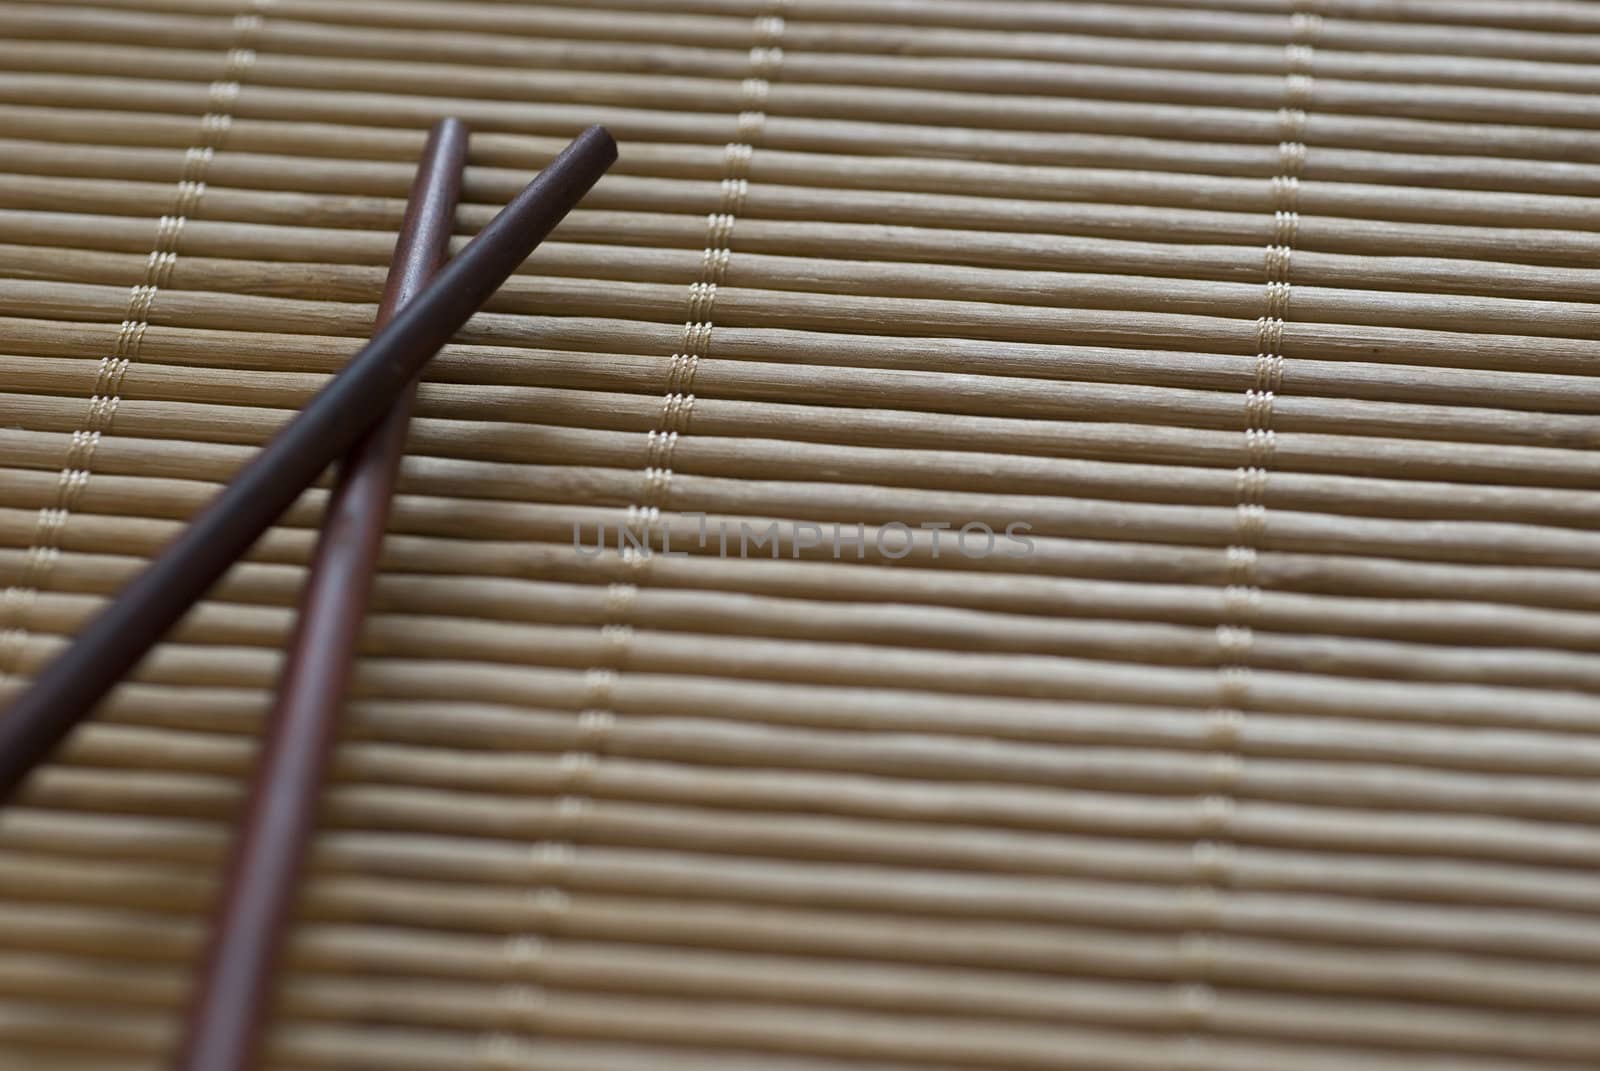 Chopsticks on a bamboo roll placemat